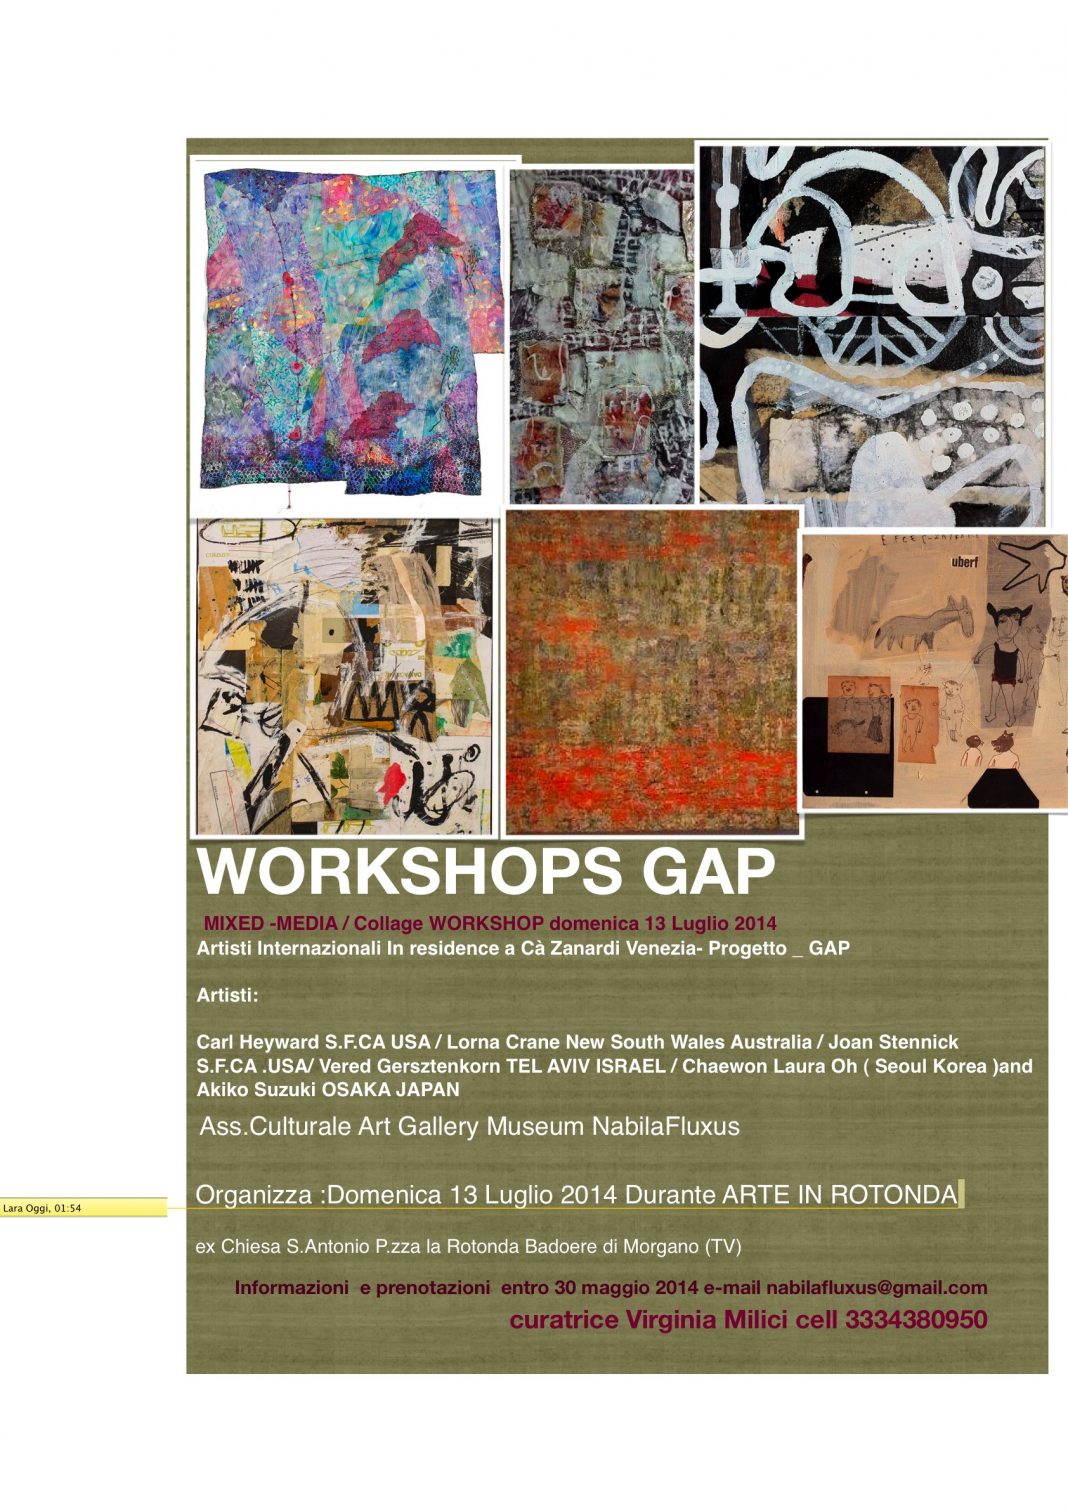 Workshop Gaphttps://www.exibart.com/repository/media/eventi/2014/05/workshop-gap-1068x1511.jpg